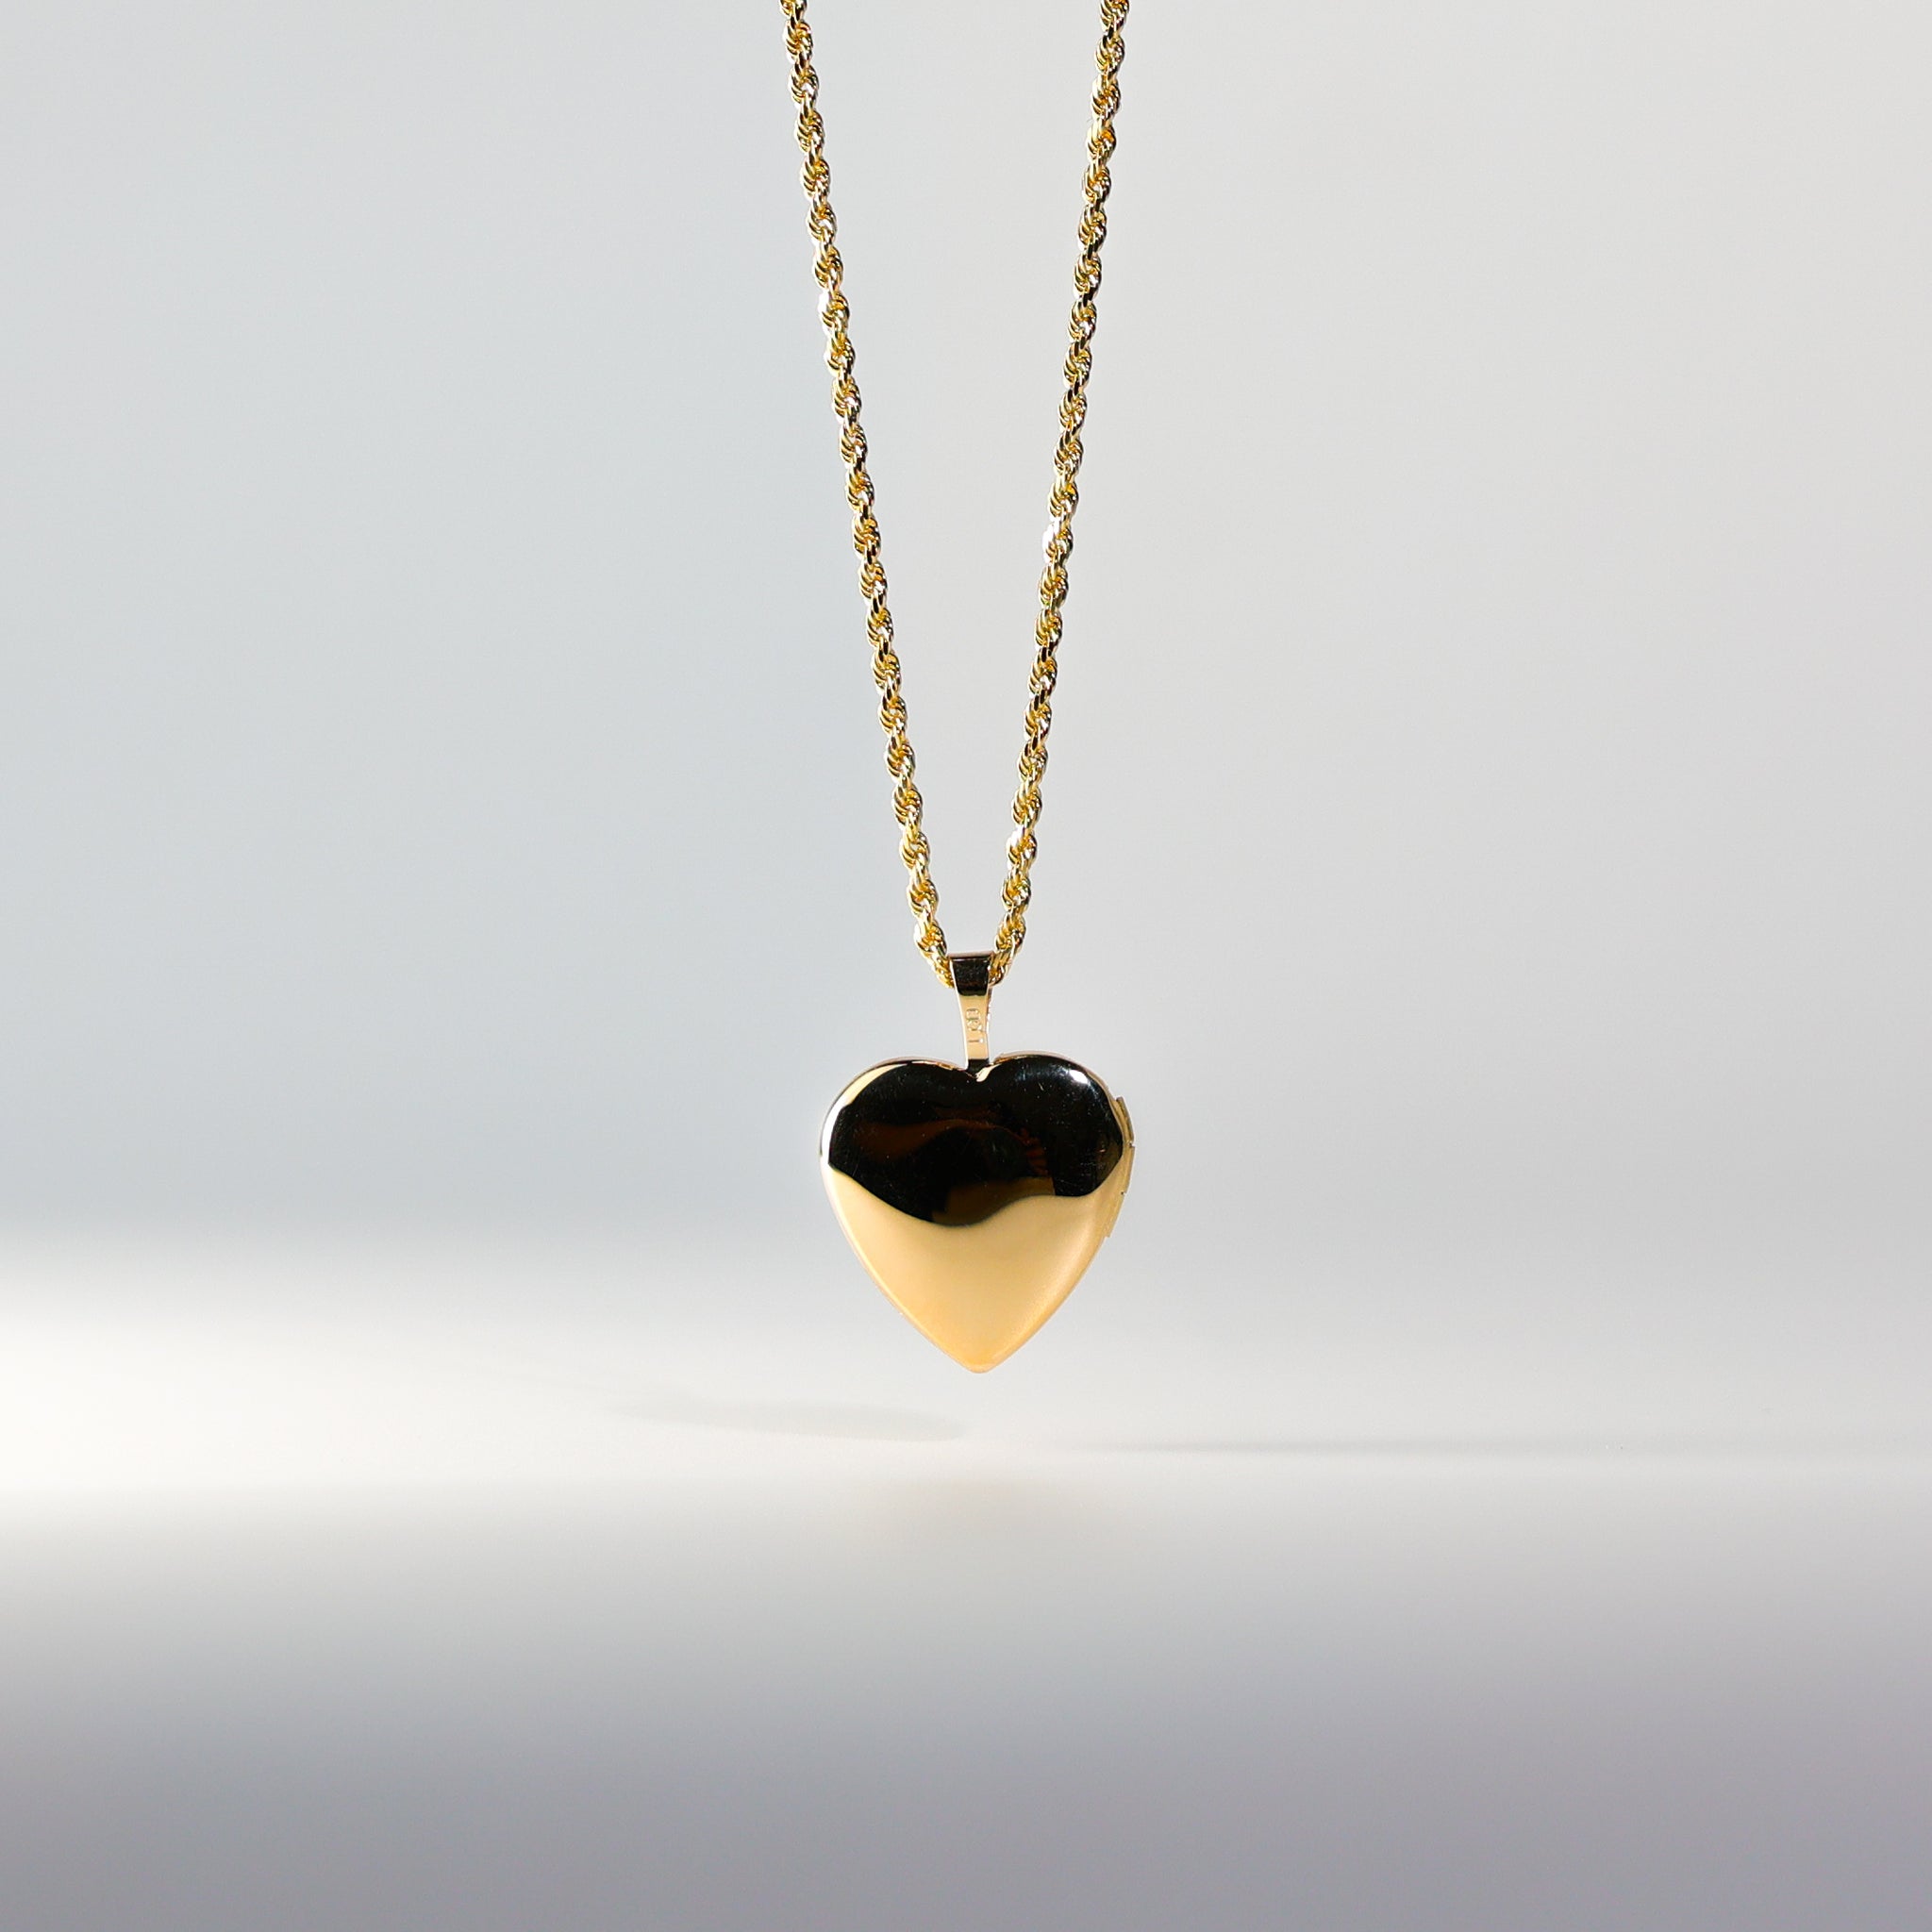 Gold Medium Heart Locket Pendant Model-PT0626 - Charlie & Co. Jewelry